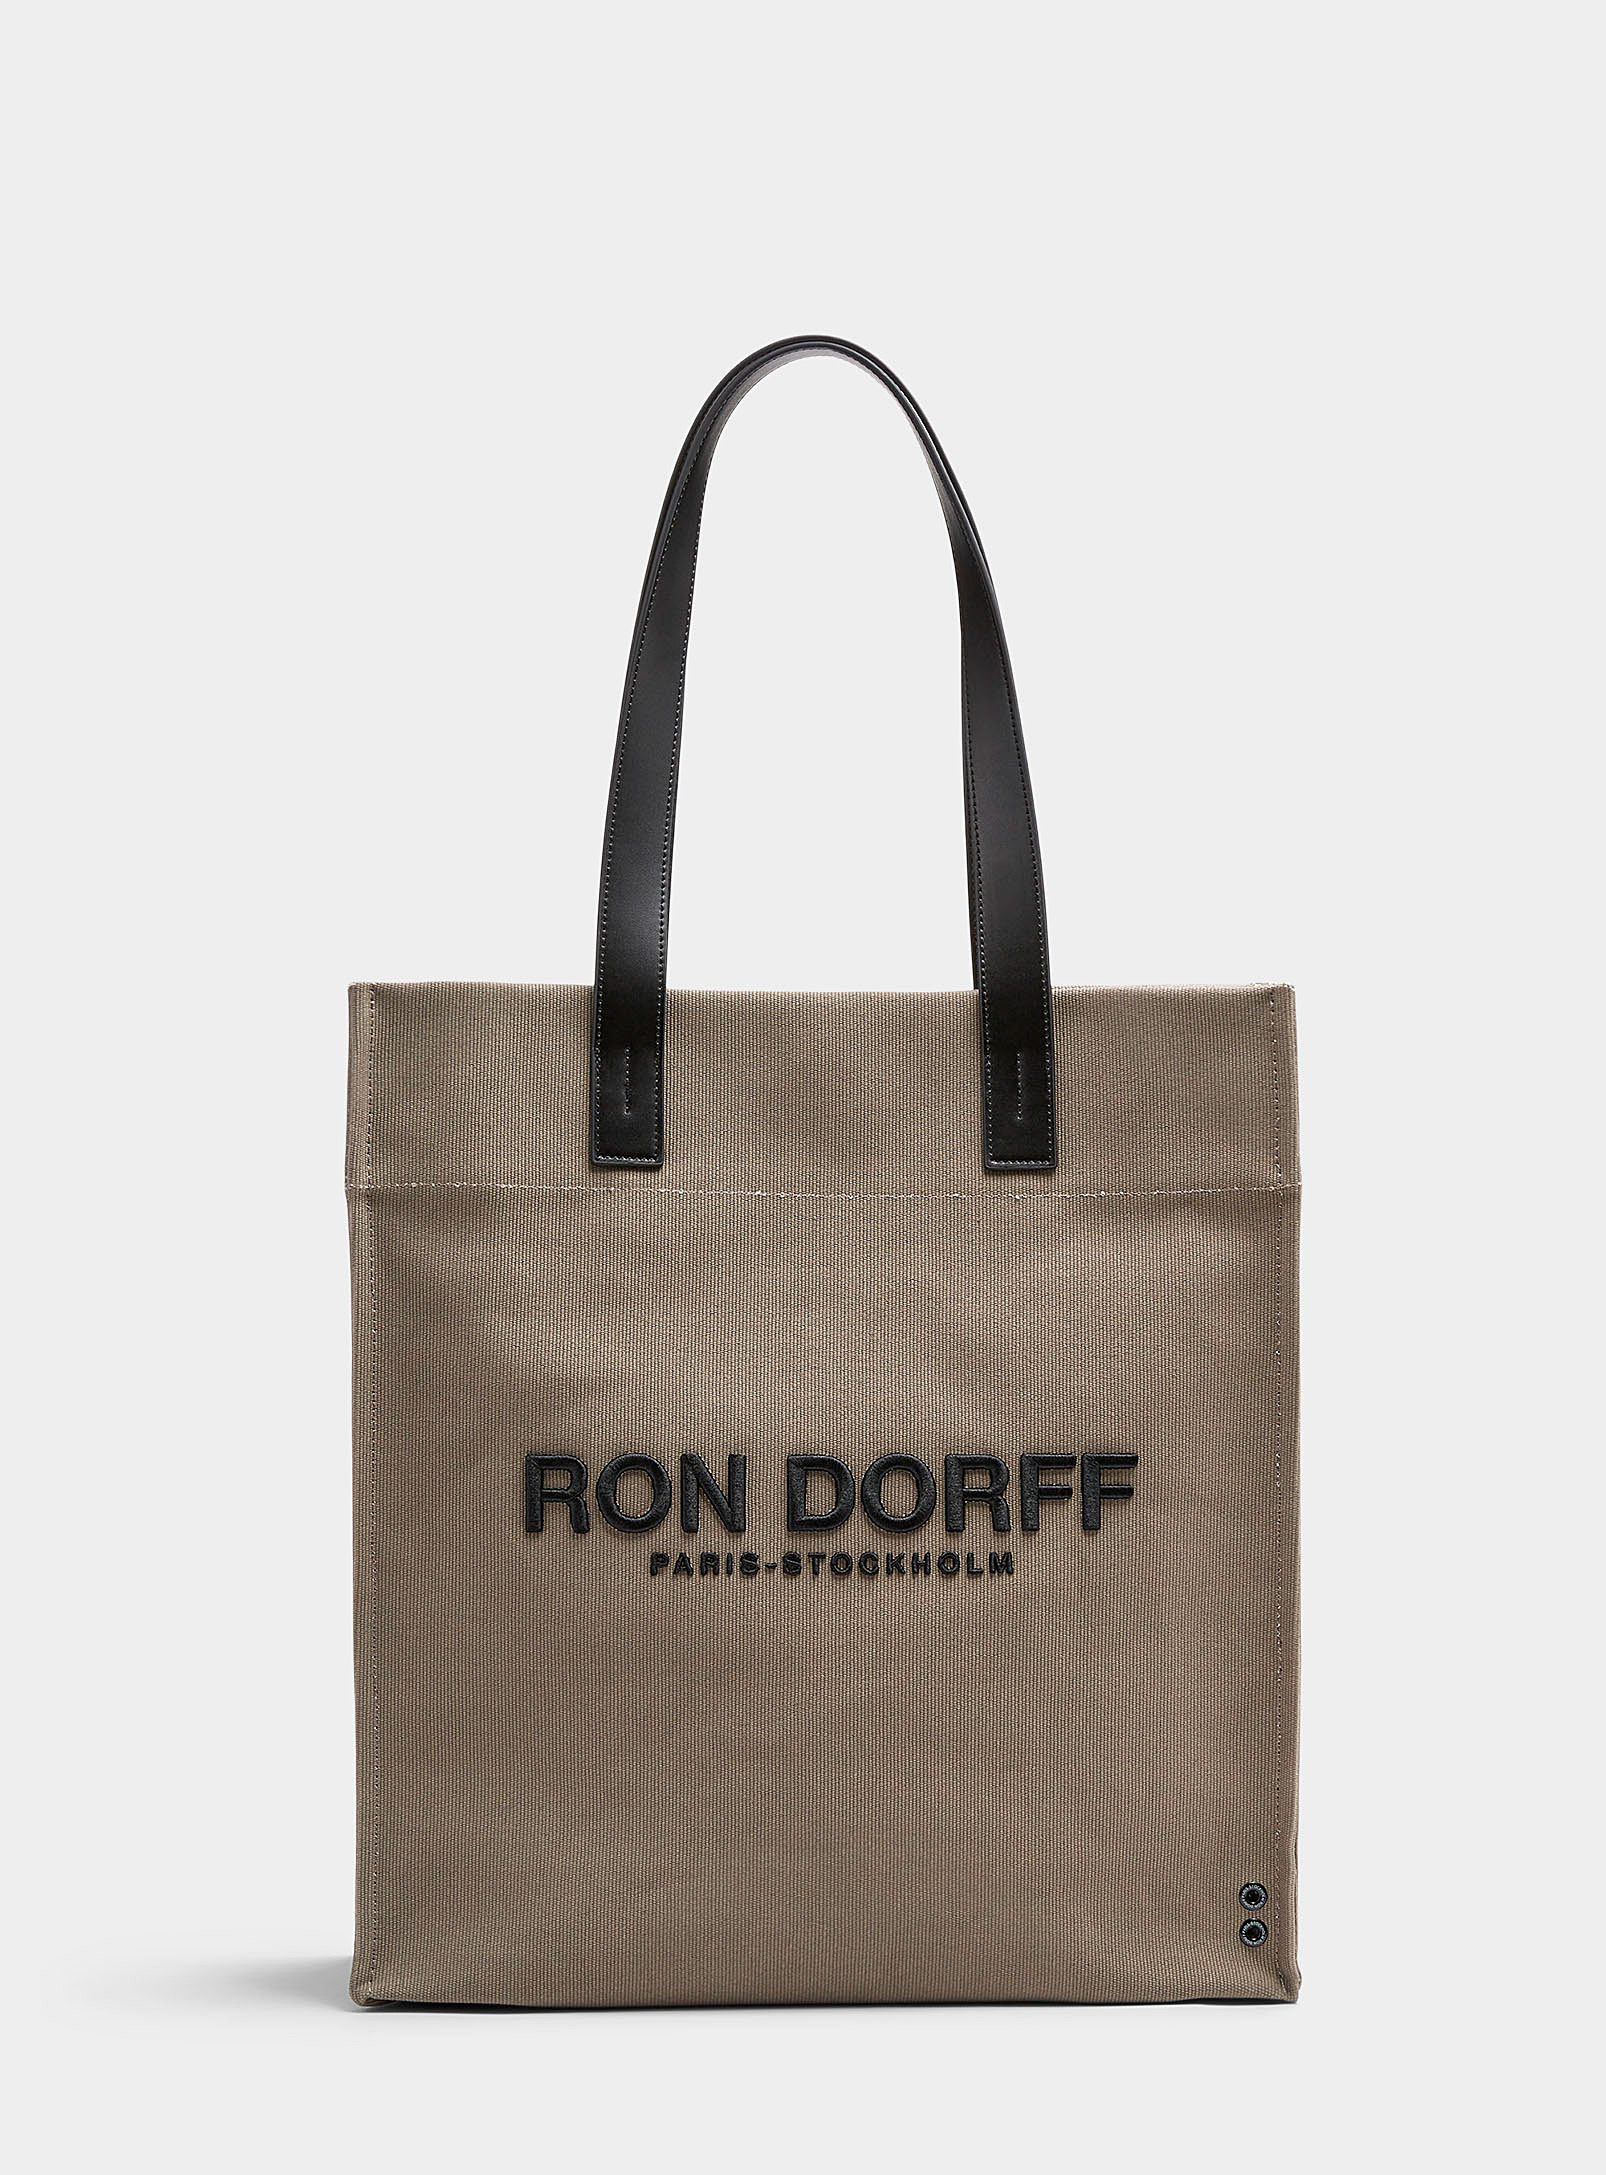 Ron Dorff City Tote Bag In Brown